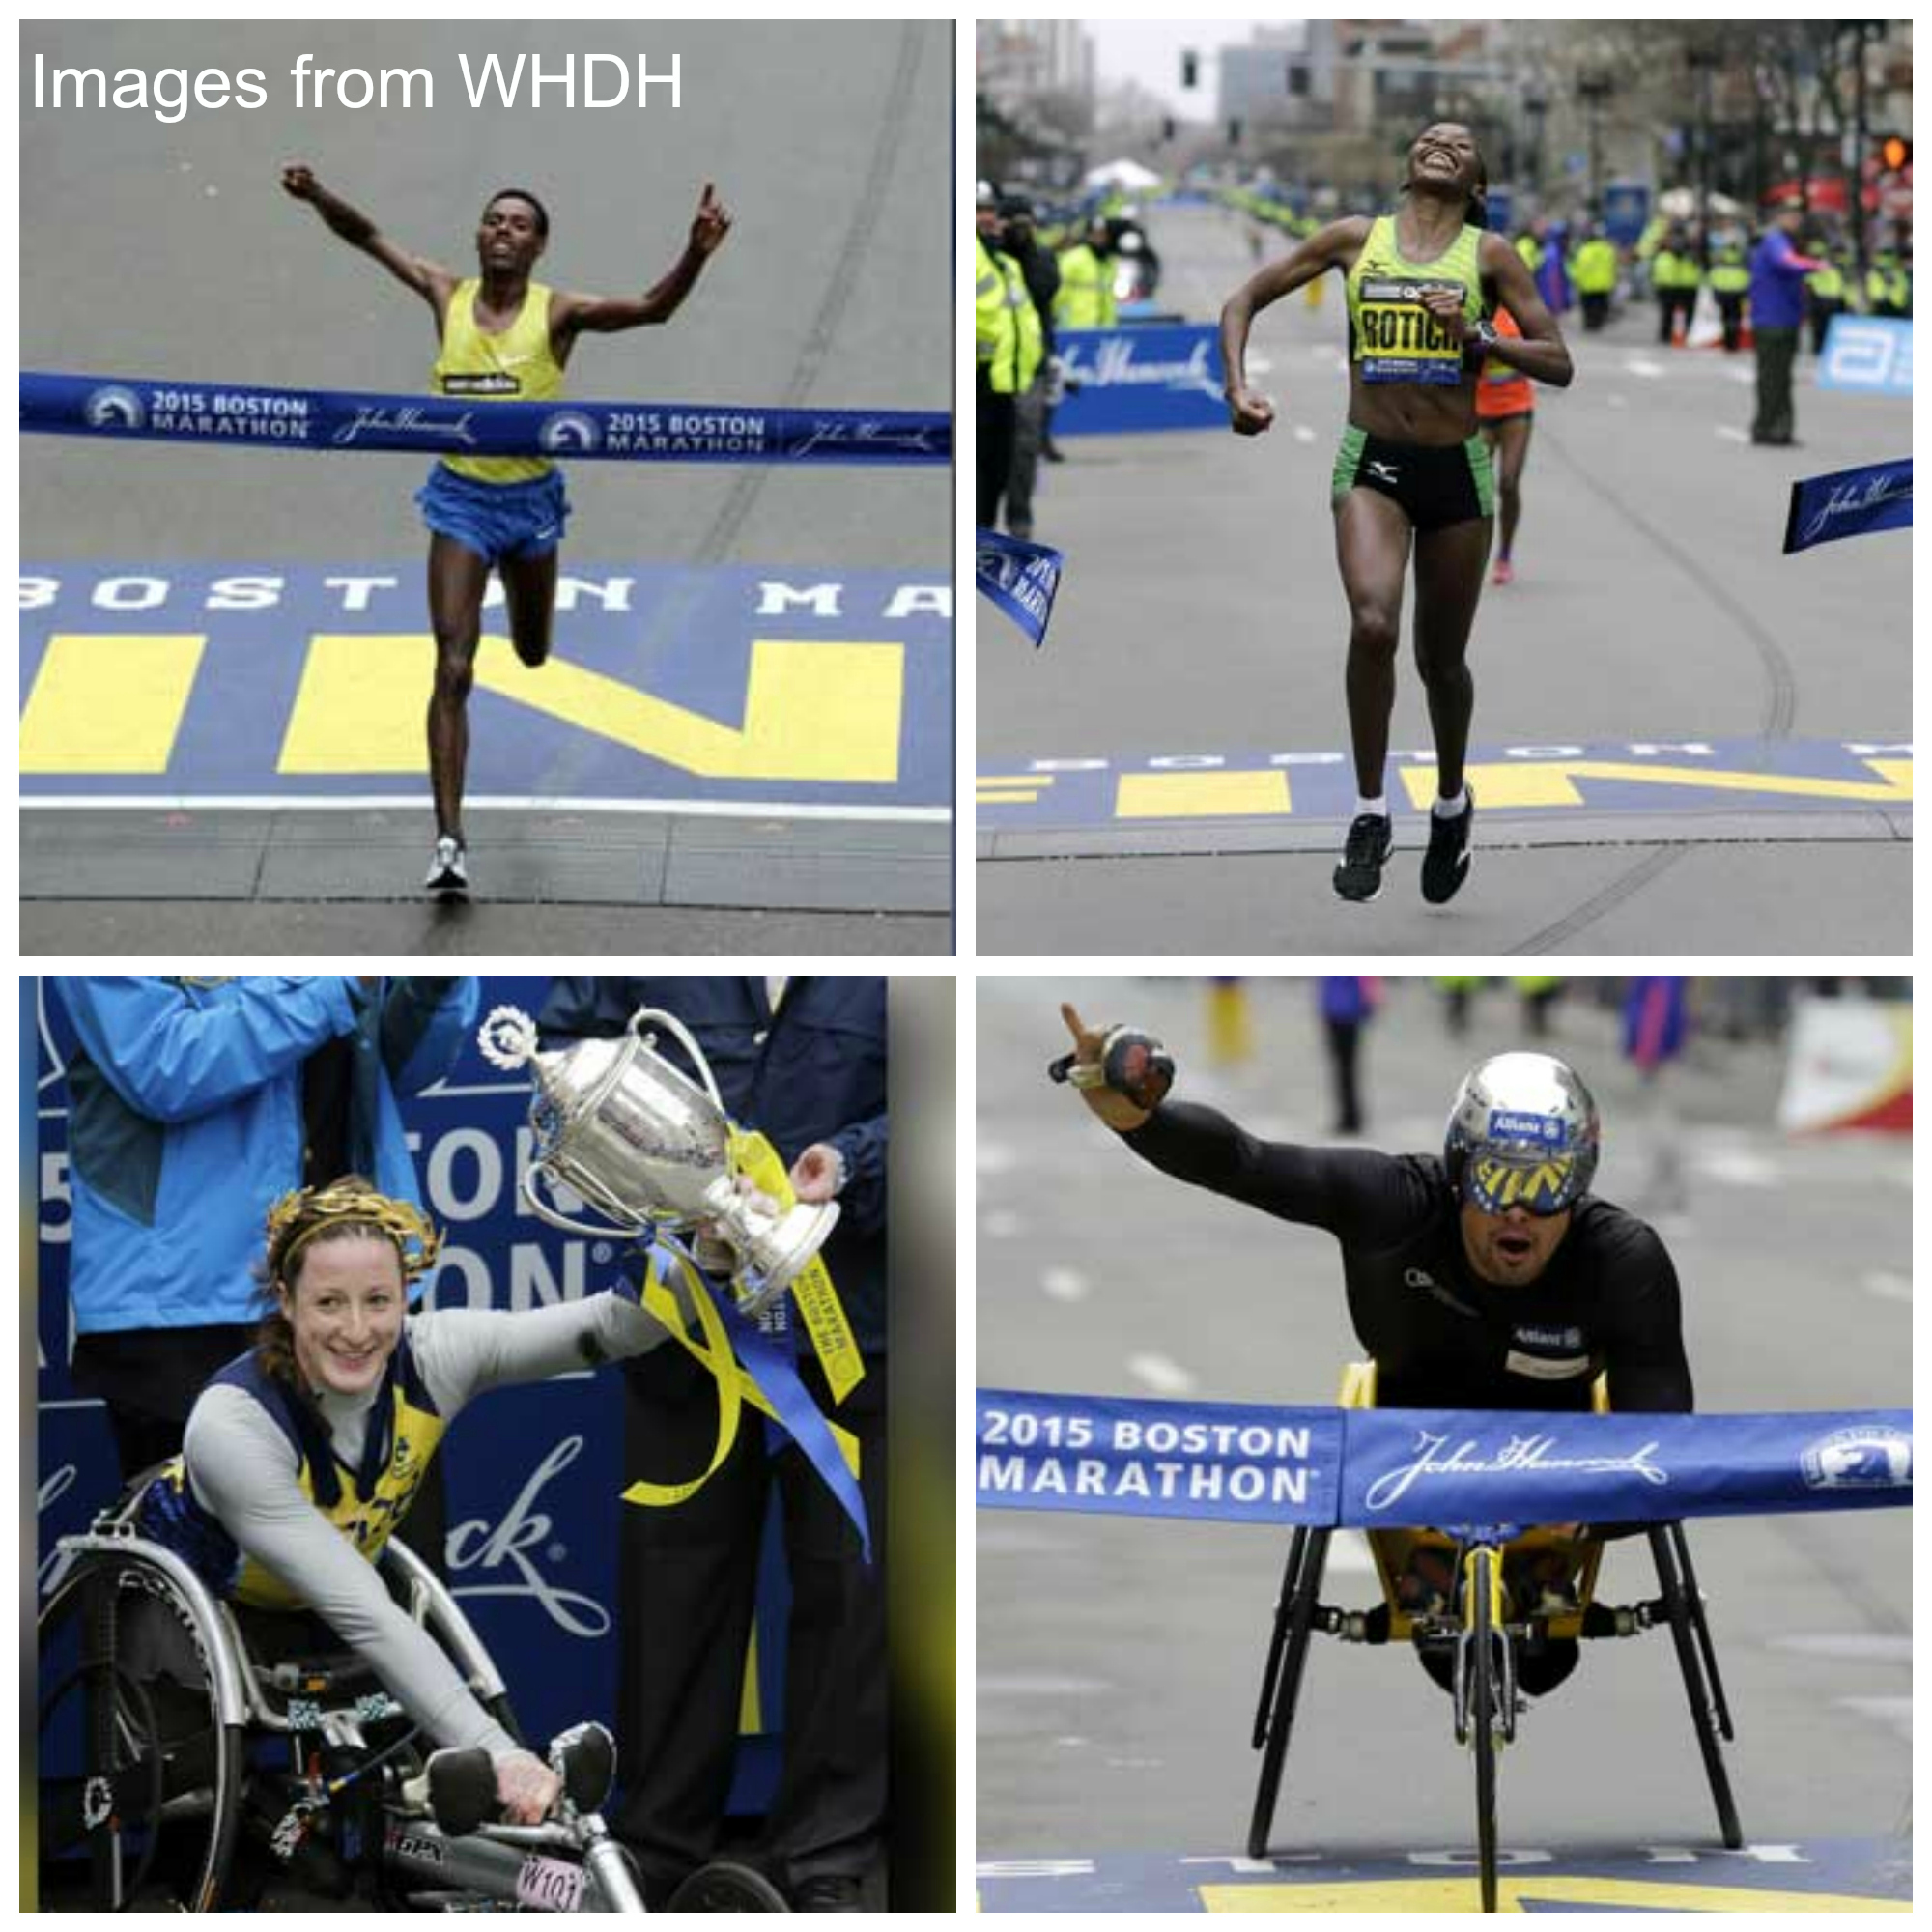 Boston Marathon winners cross the finish line